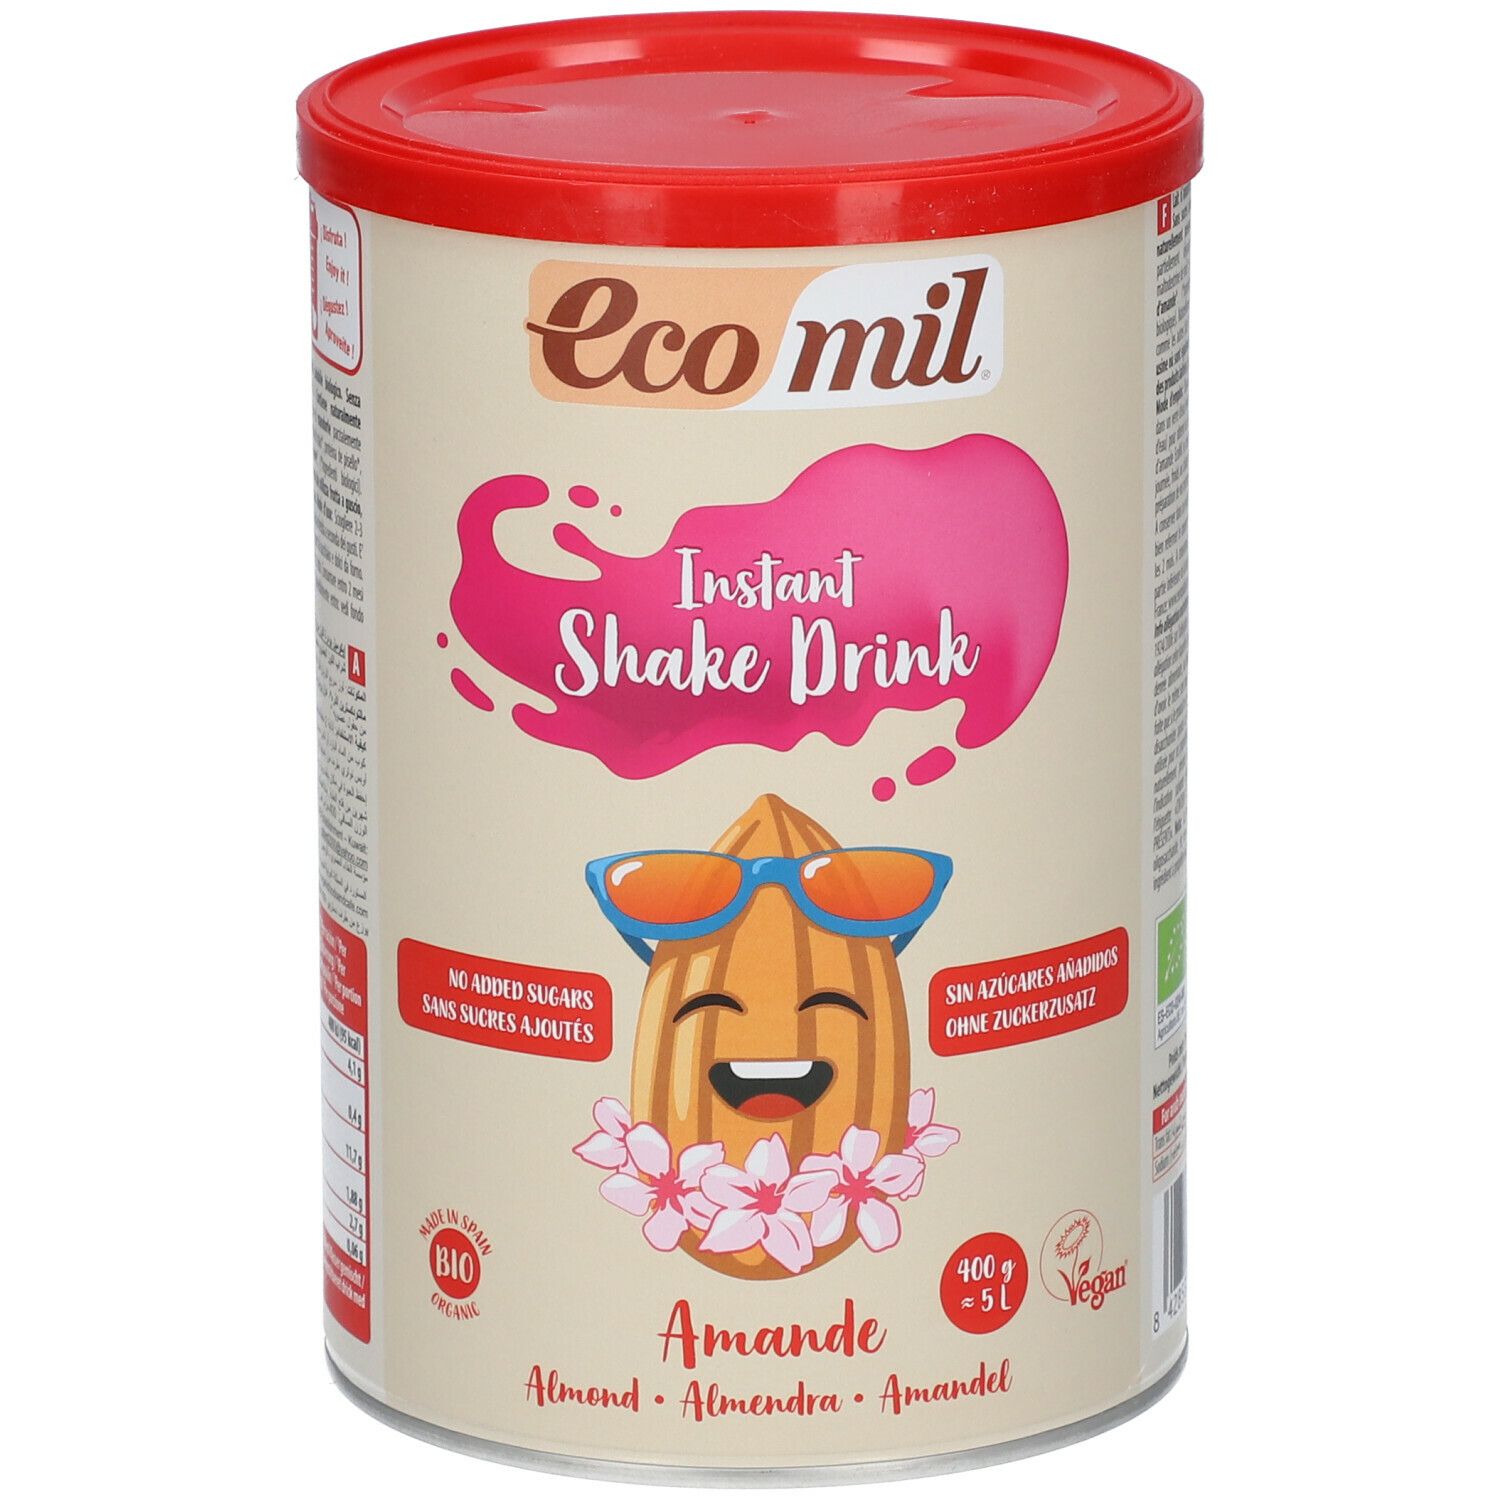 Eco mil Instant Shake Drink Amande